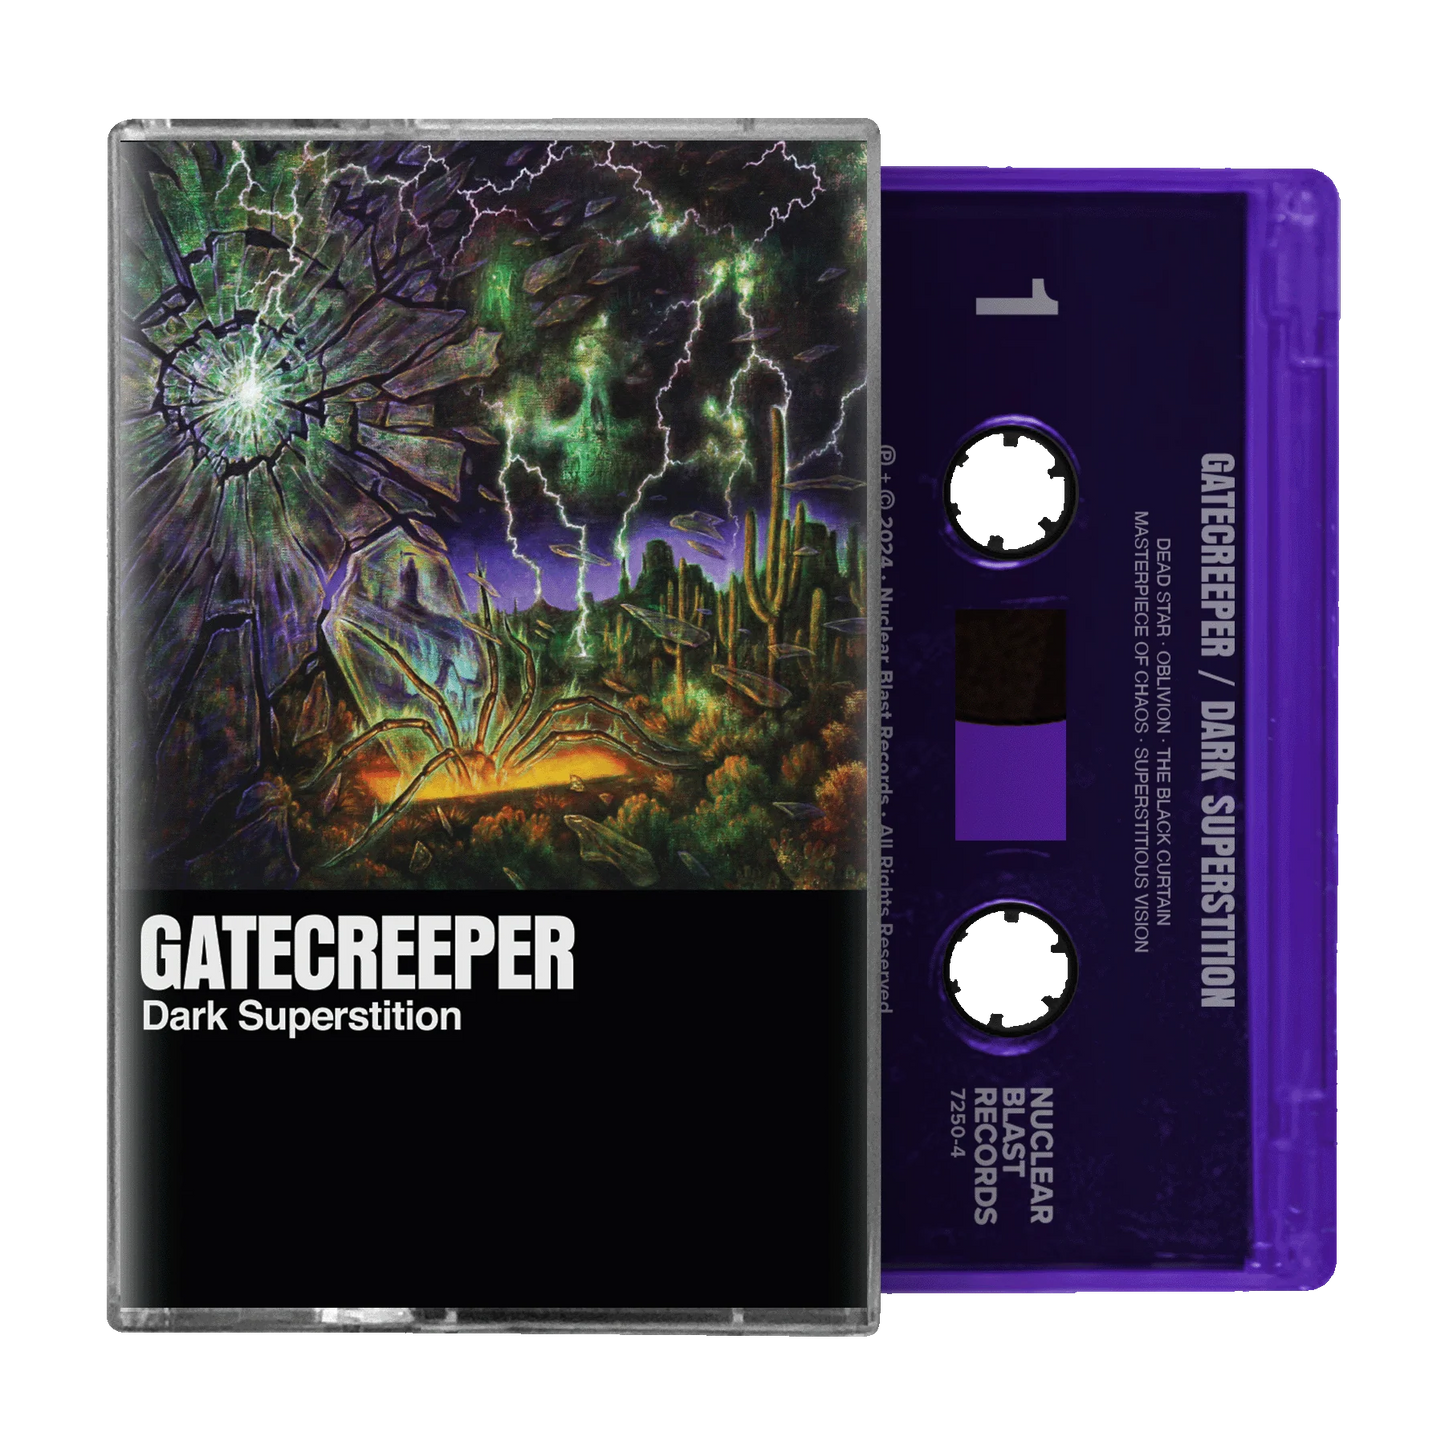 Gatecreeper - Dark Superstition cassette tape